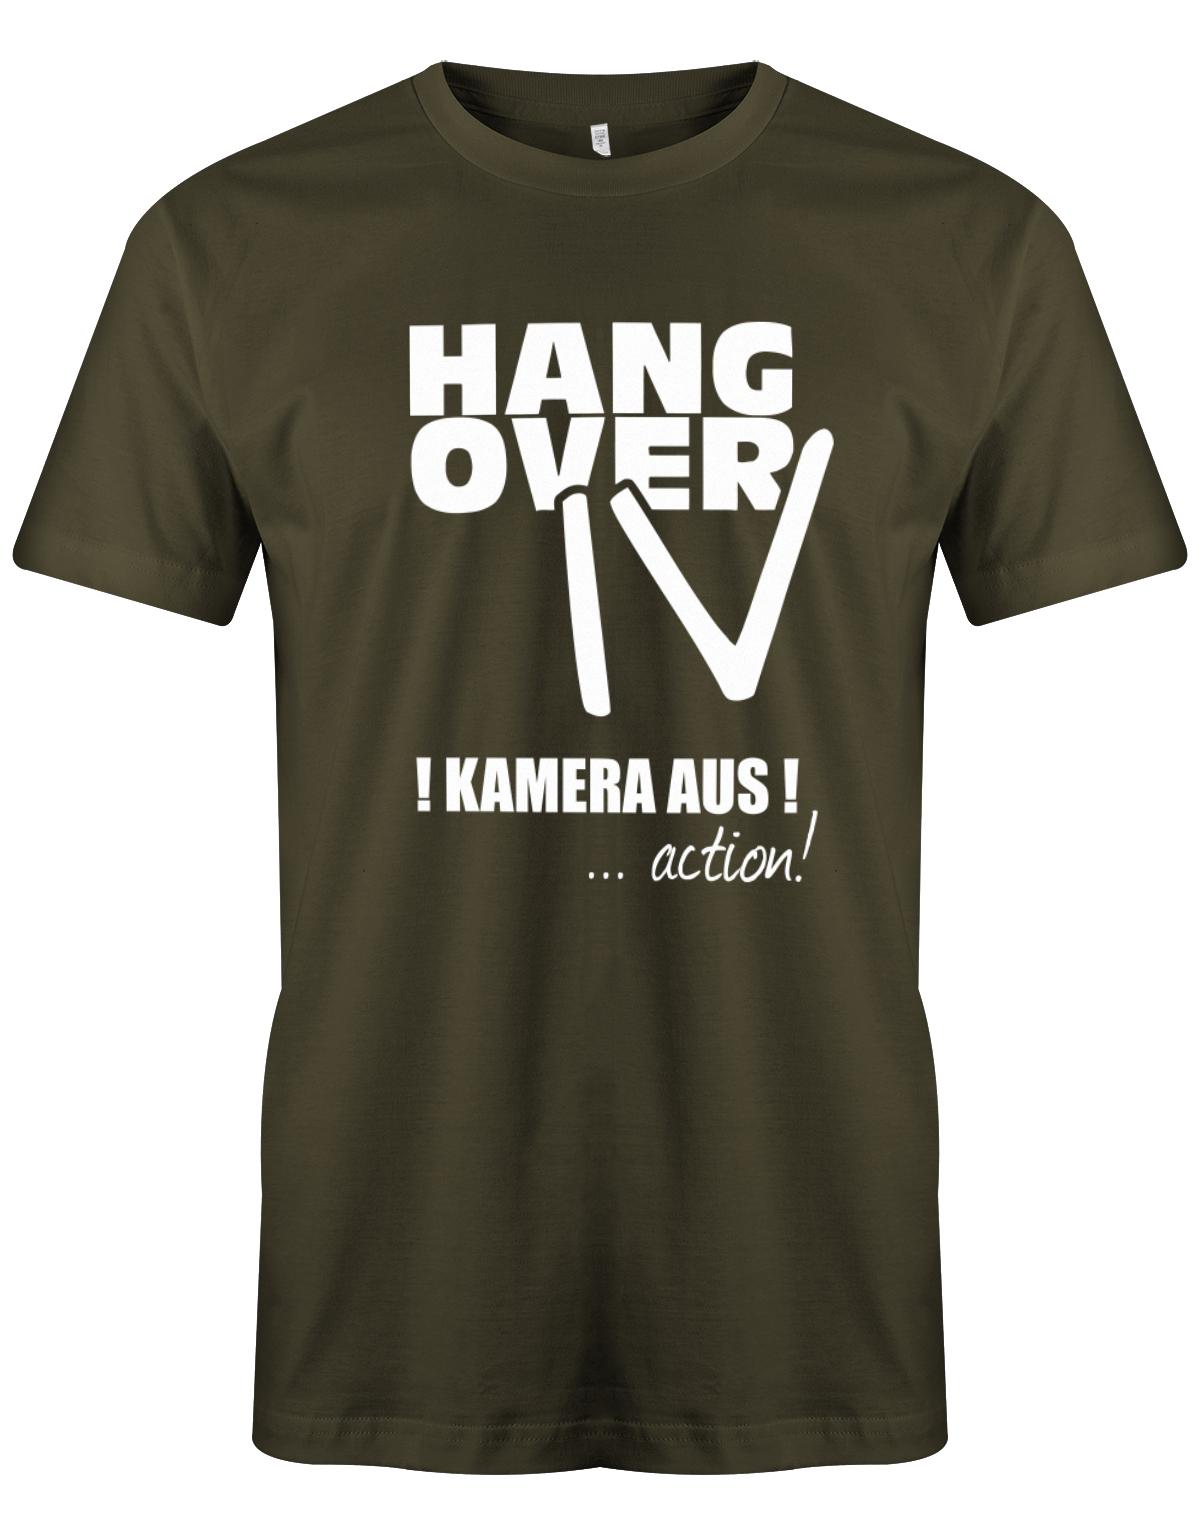 Hangover-4-Kamera-aus-Action-Herren-Shirt-Army